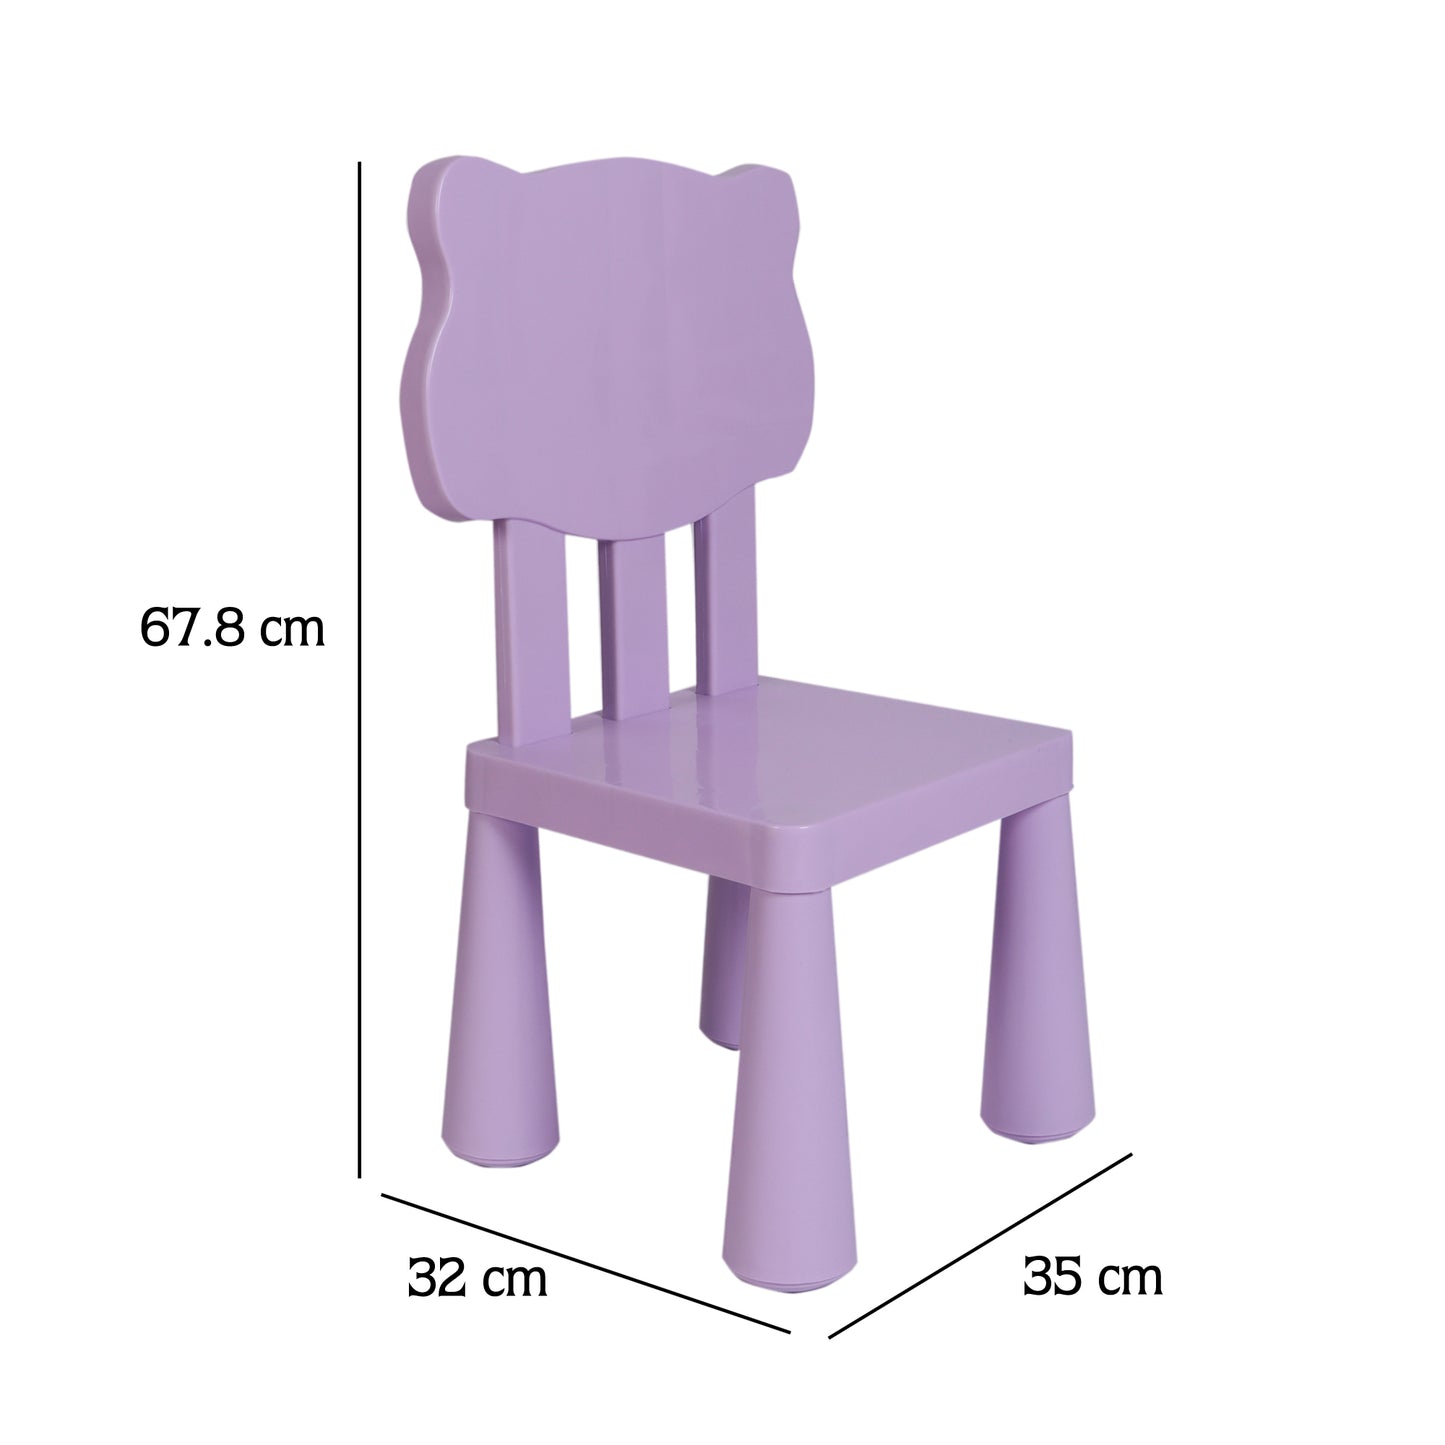 Toddler Chair Purple (2-9 yrs)